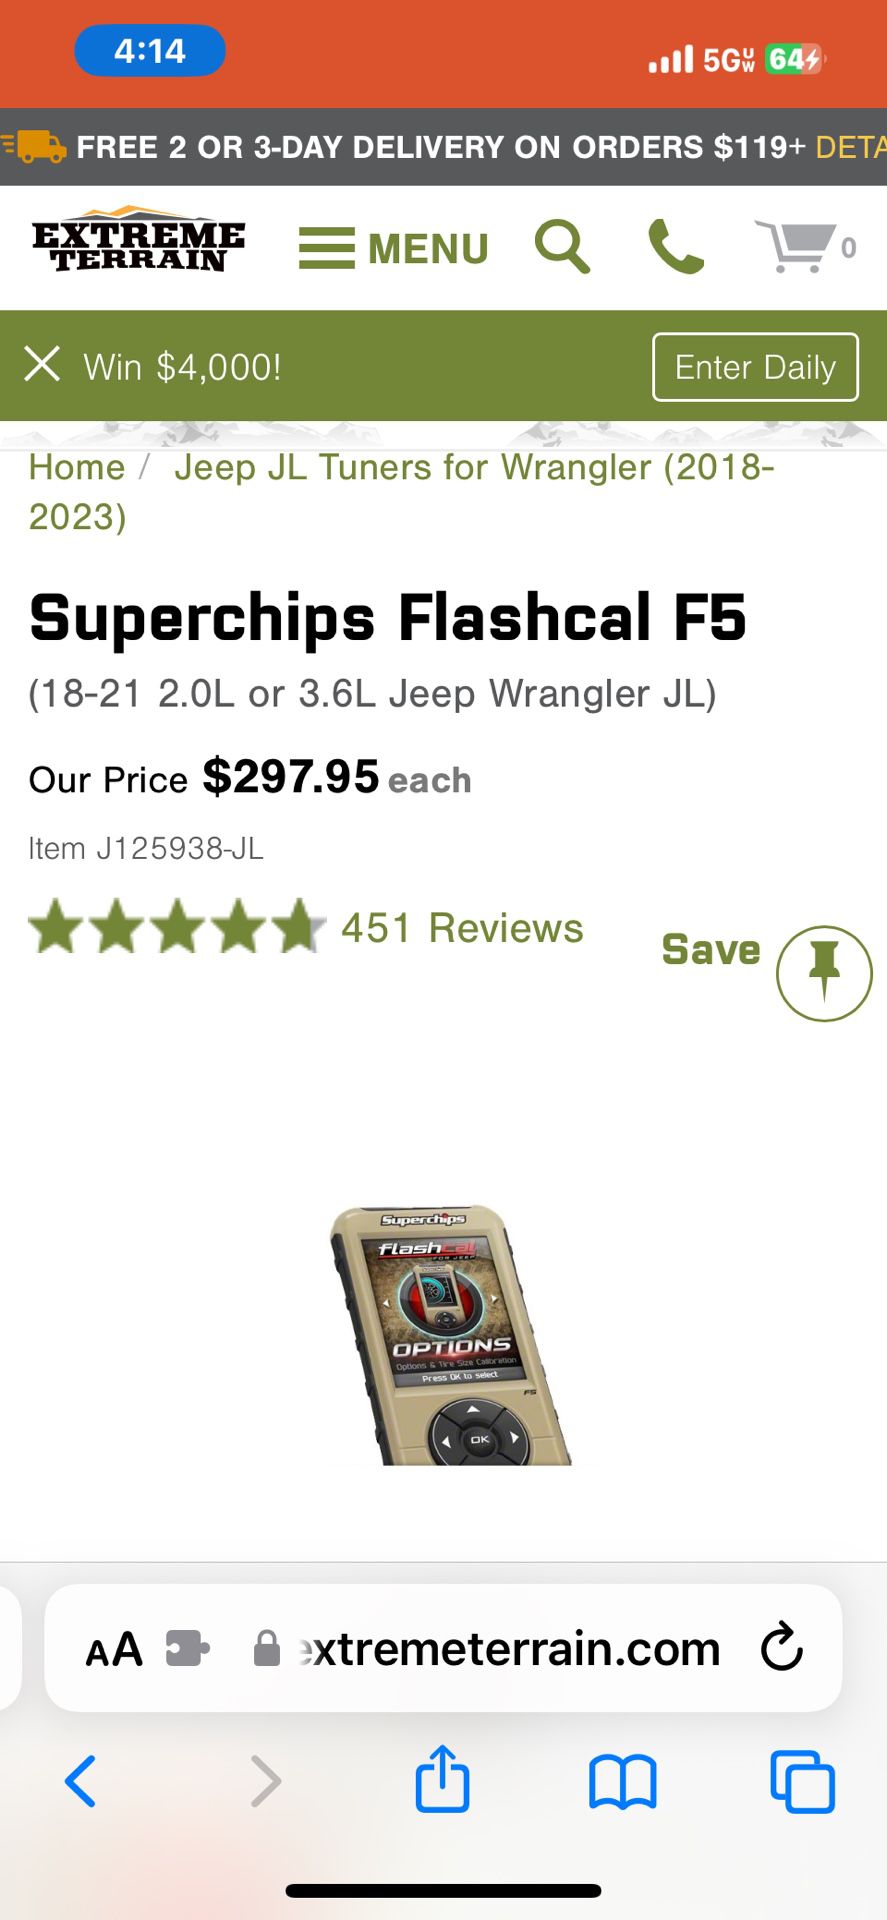 Superchips Flashcal F5